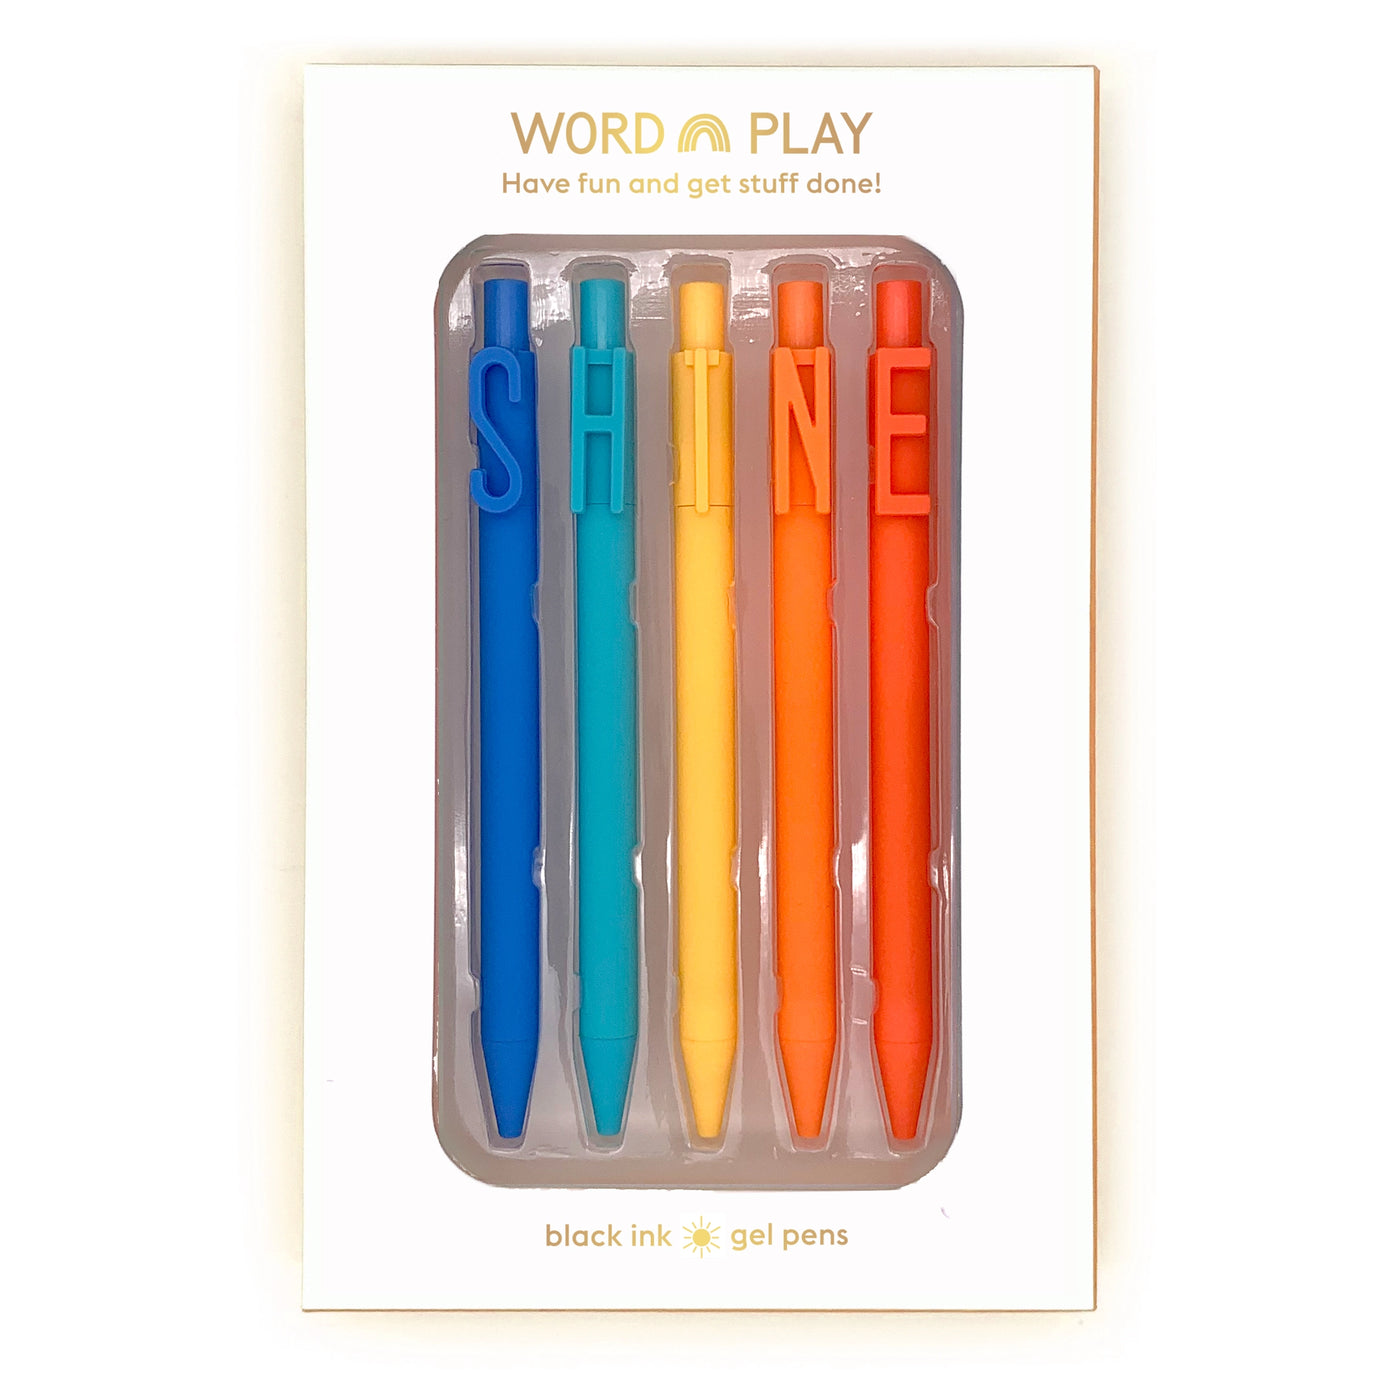 shine word play pen set